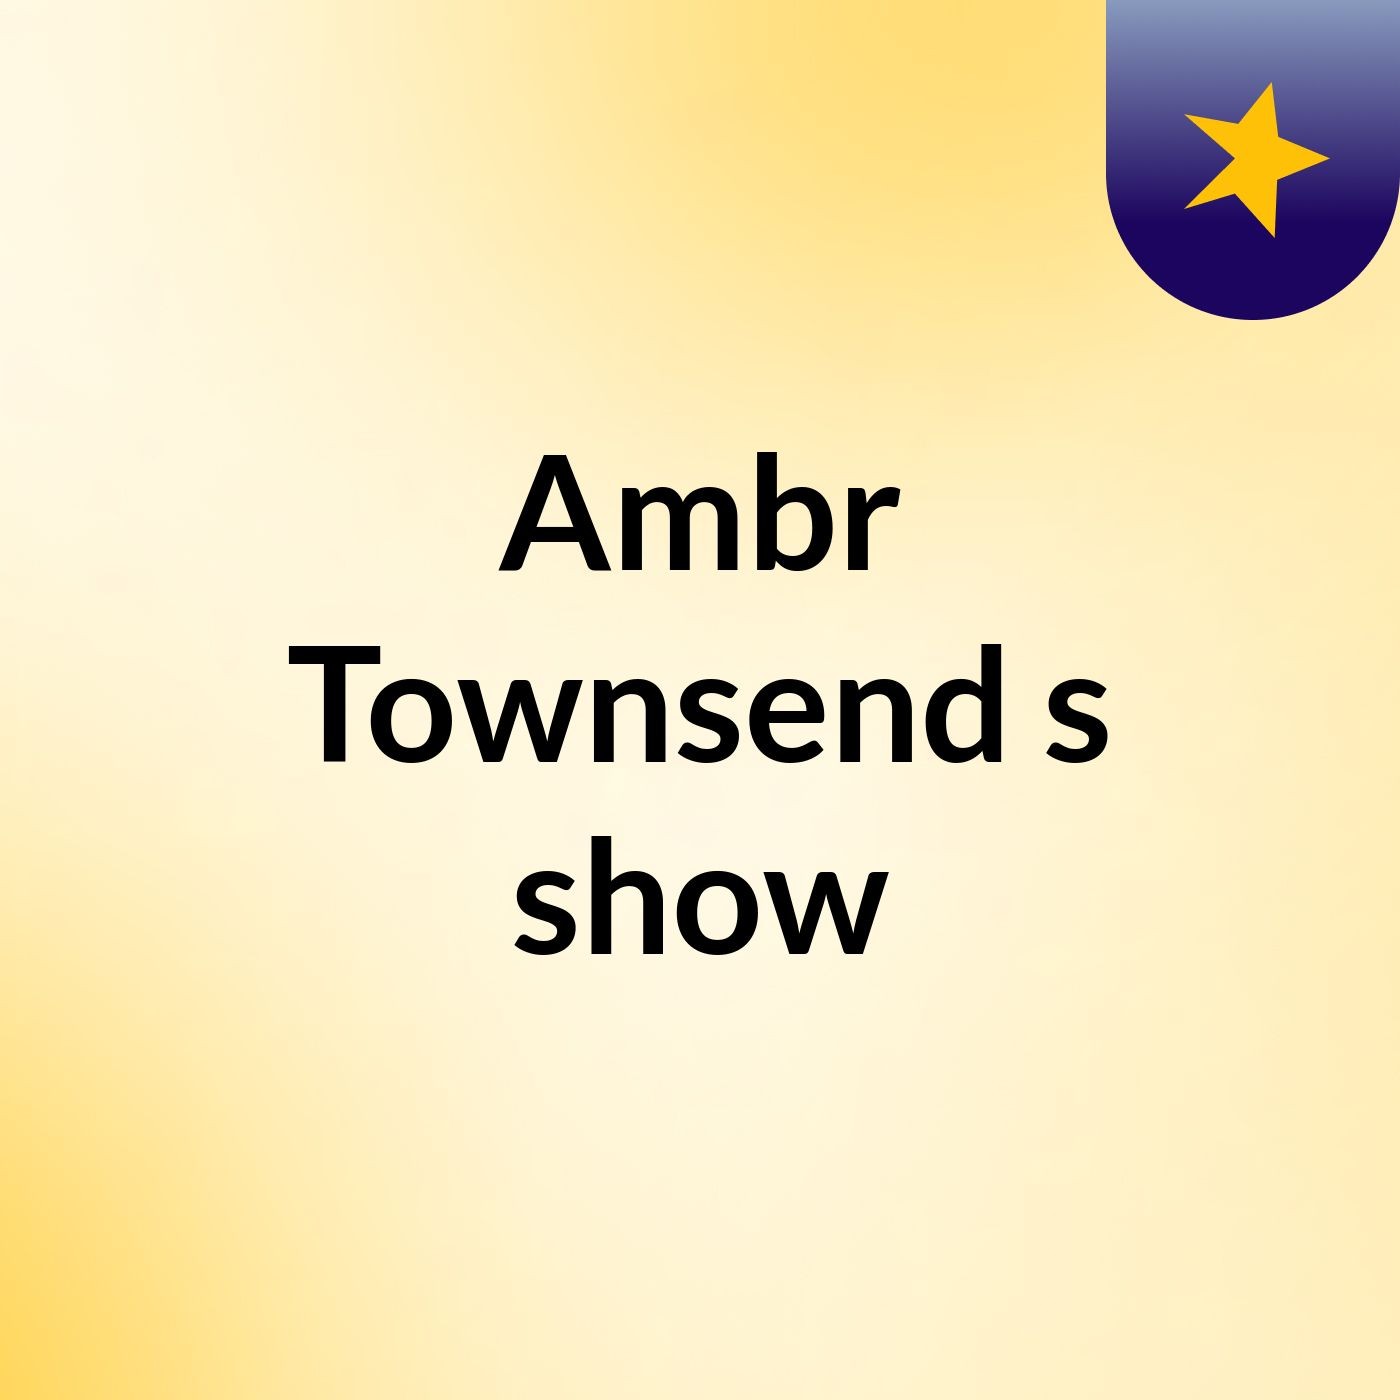 Ambr Townsend's show